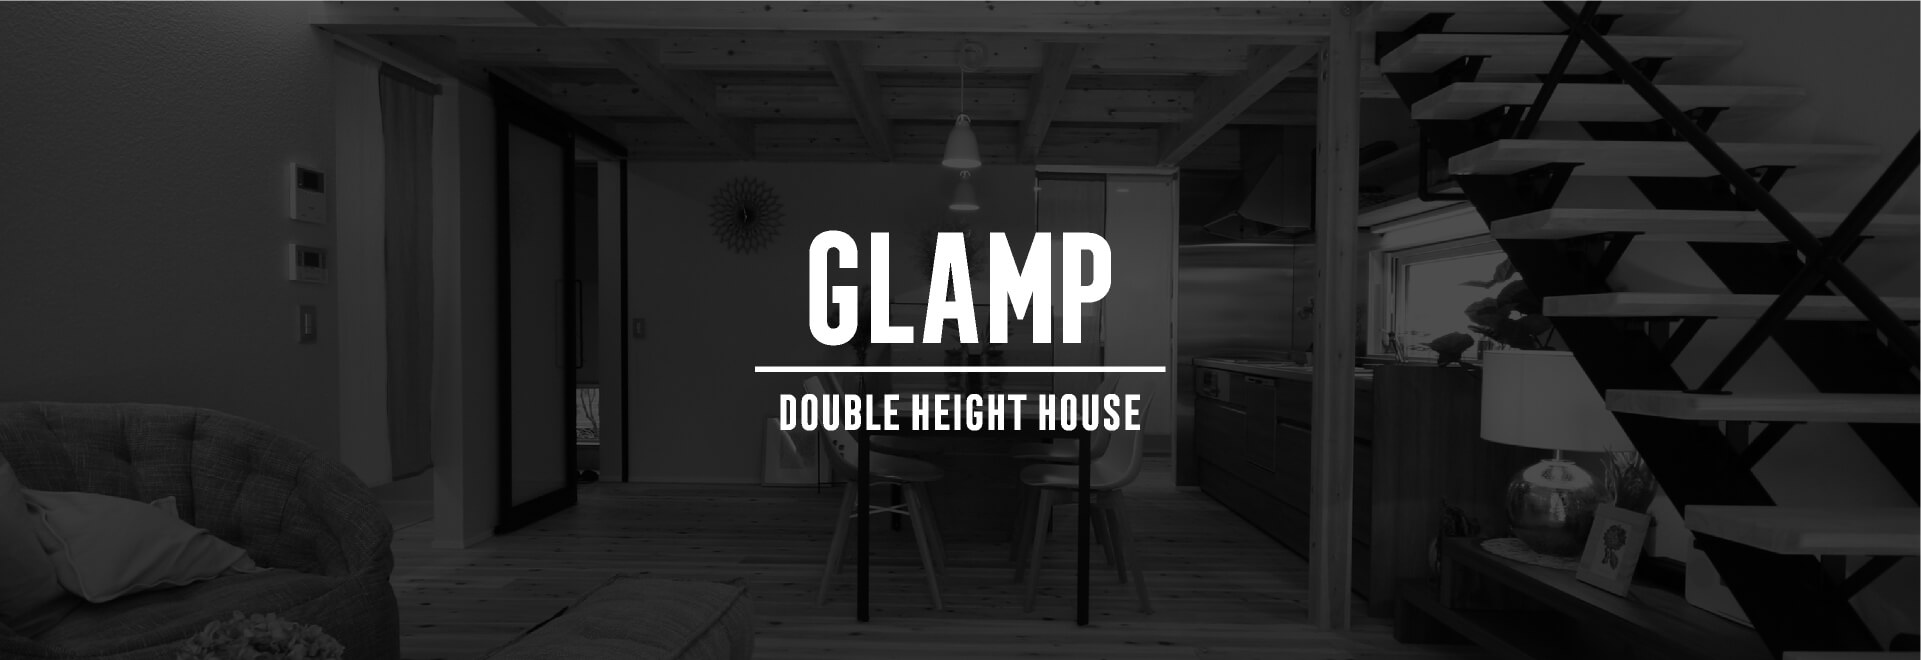 glamp グランプ 栃木県宇都宮市で注文住宅を手掛ける NEXT HAUS DESIGN ネクストハウスデザインの商品紹介